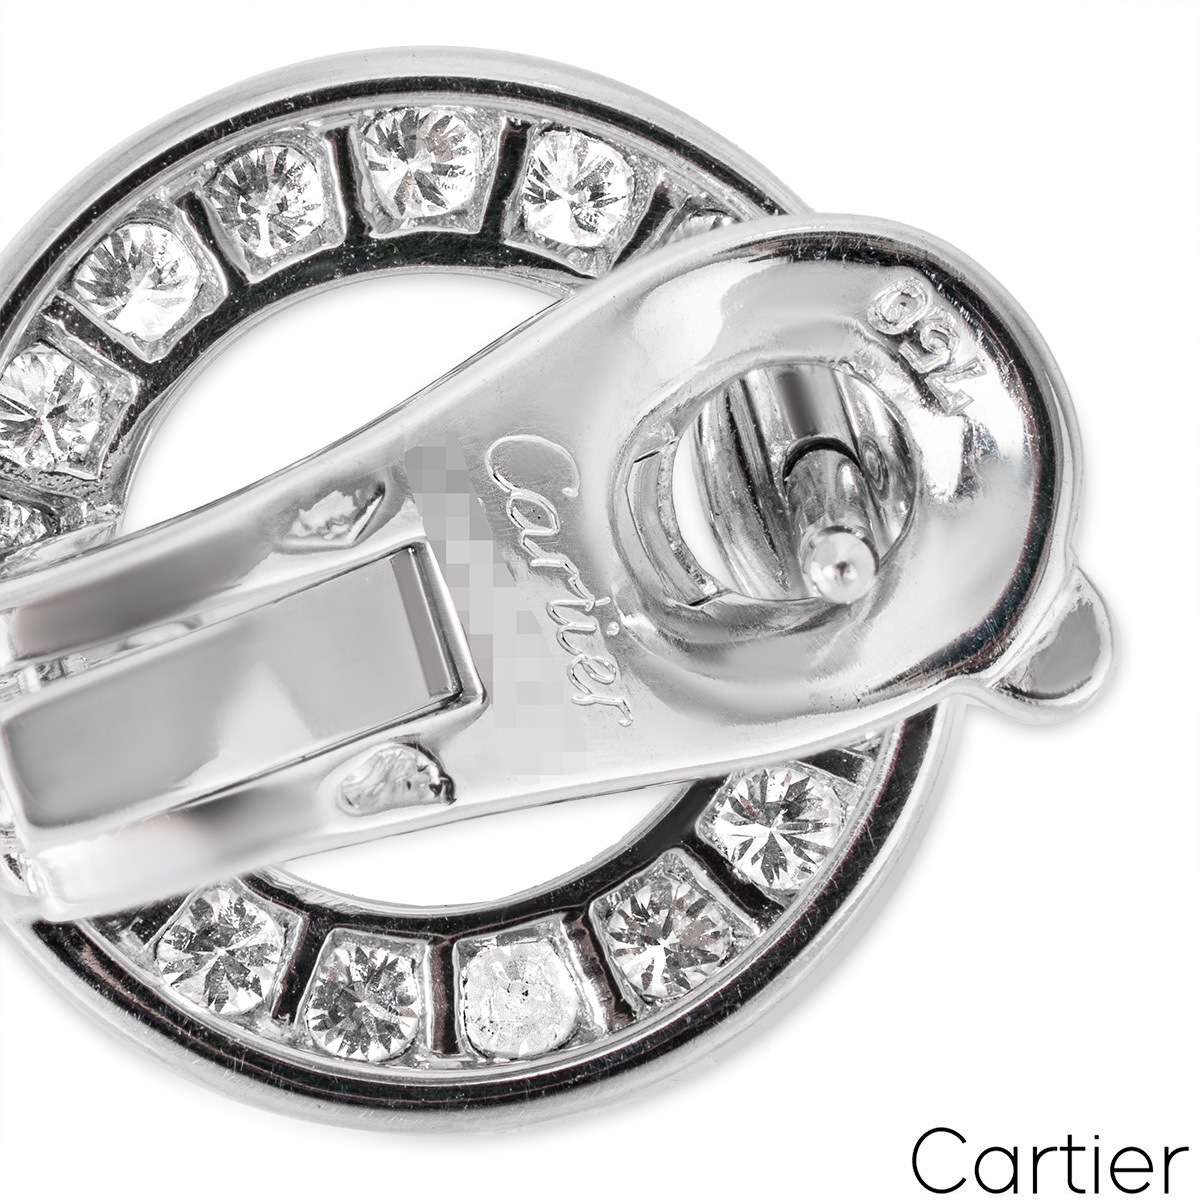 Cartier White Gold Pearl & Diamond Agrafe Earrings